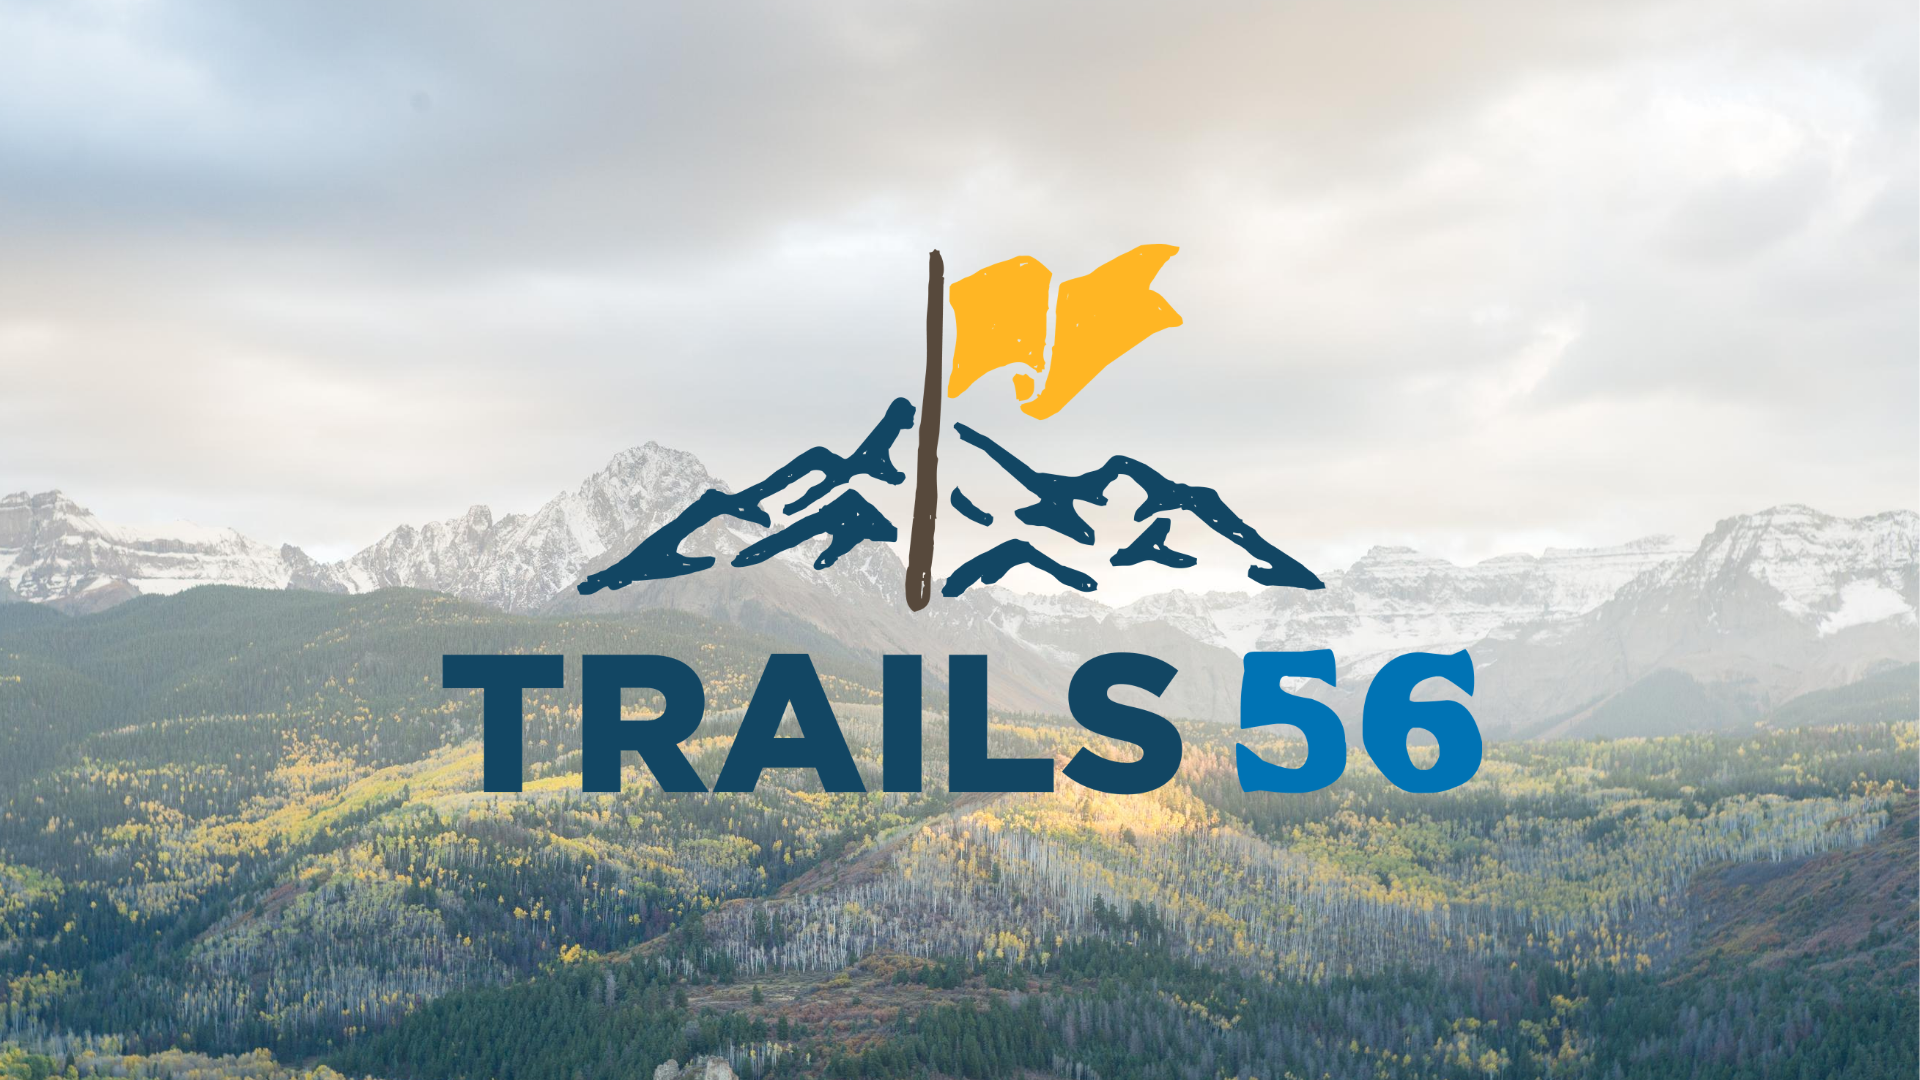 Trails 56 Fall 2020 image